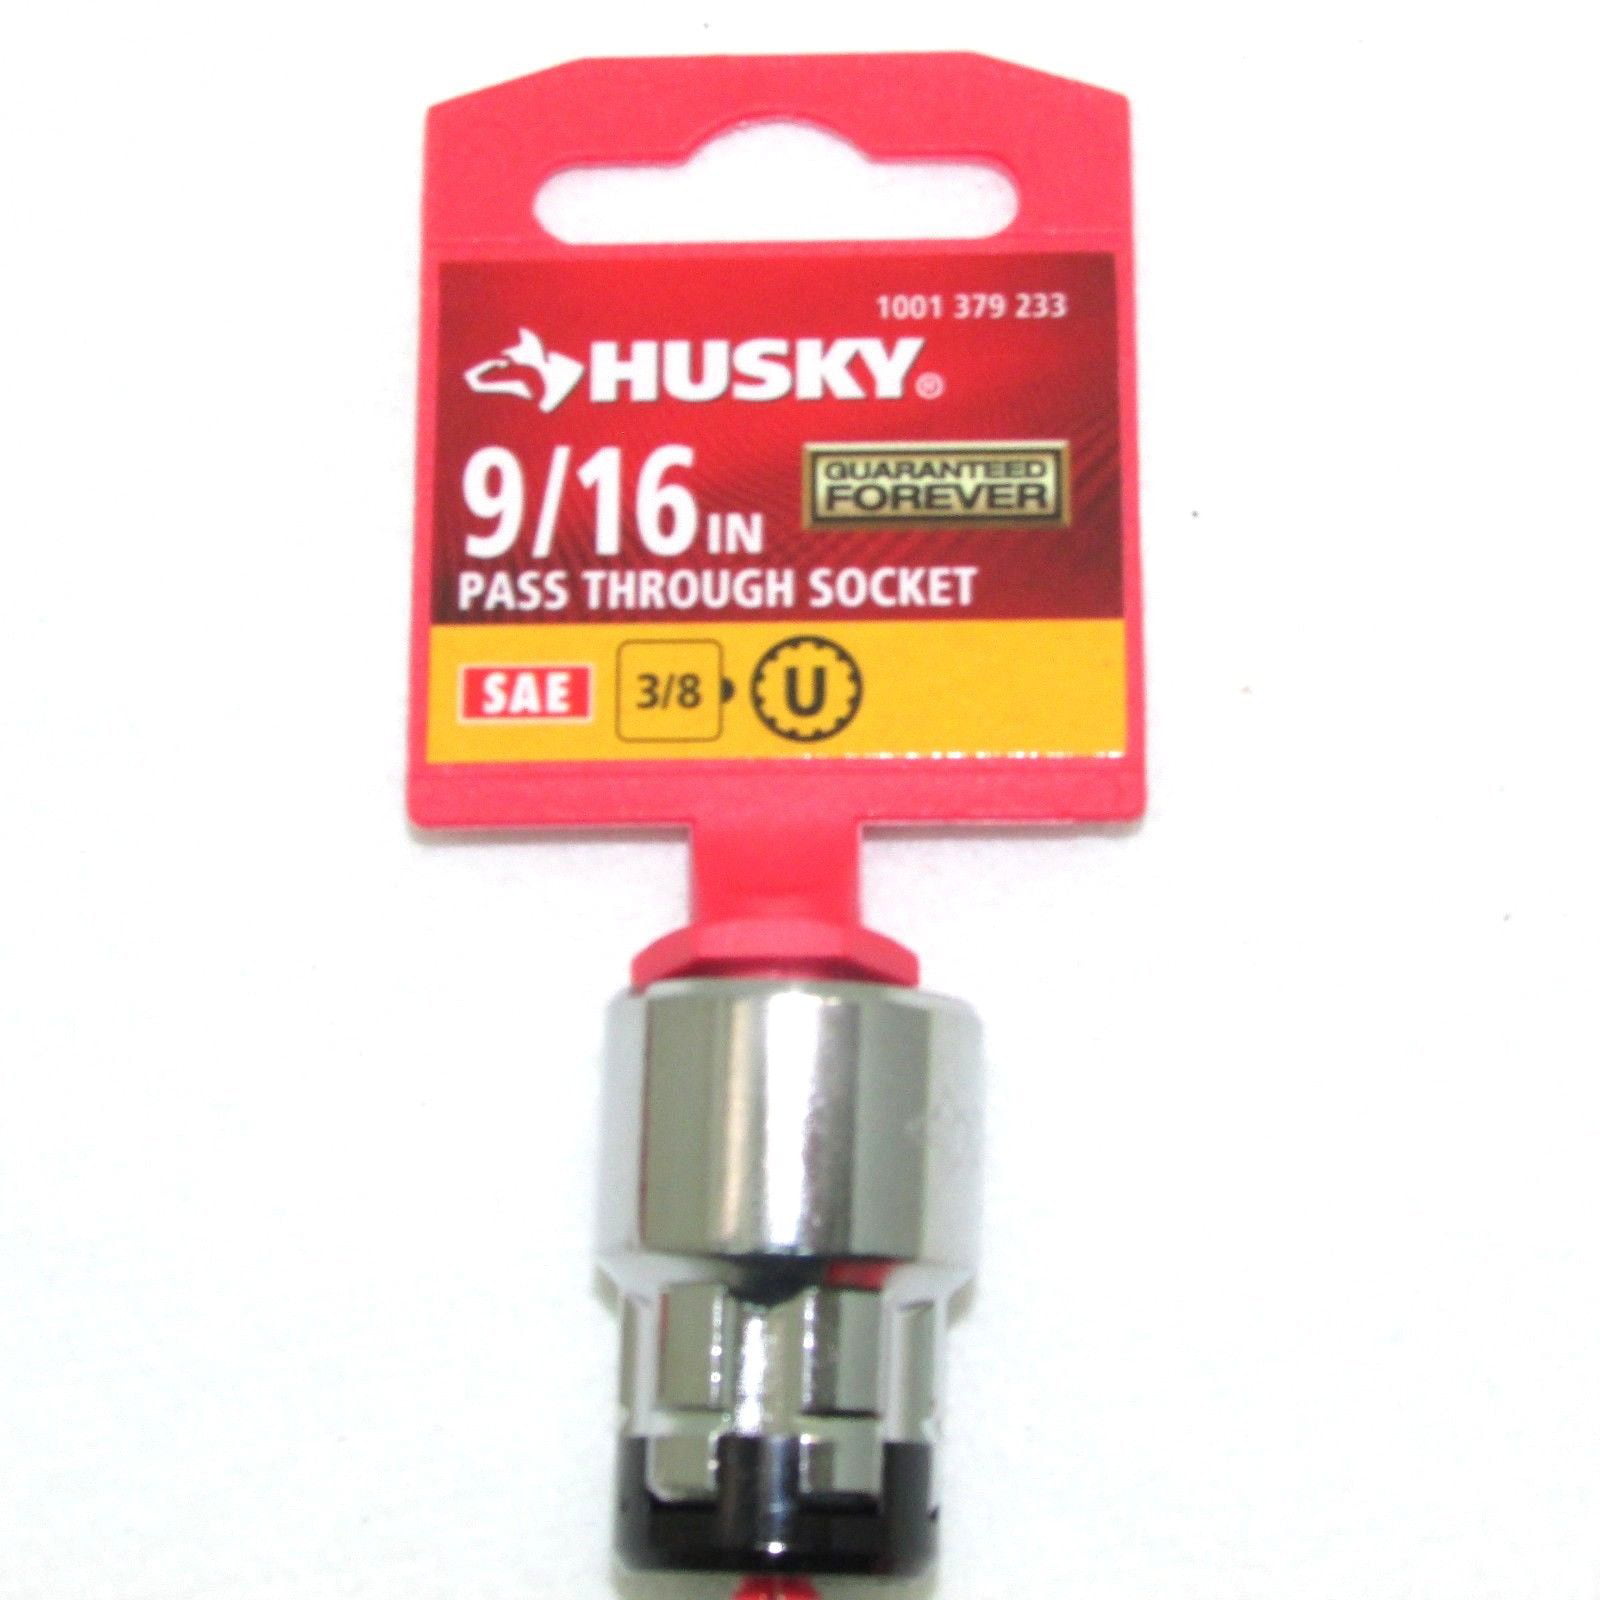 Husky 9/16" Universal Pass Through Ratchet Socket 3/8" Drive Full Polish Chrome 